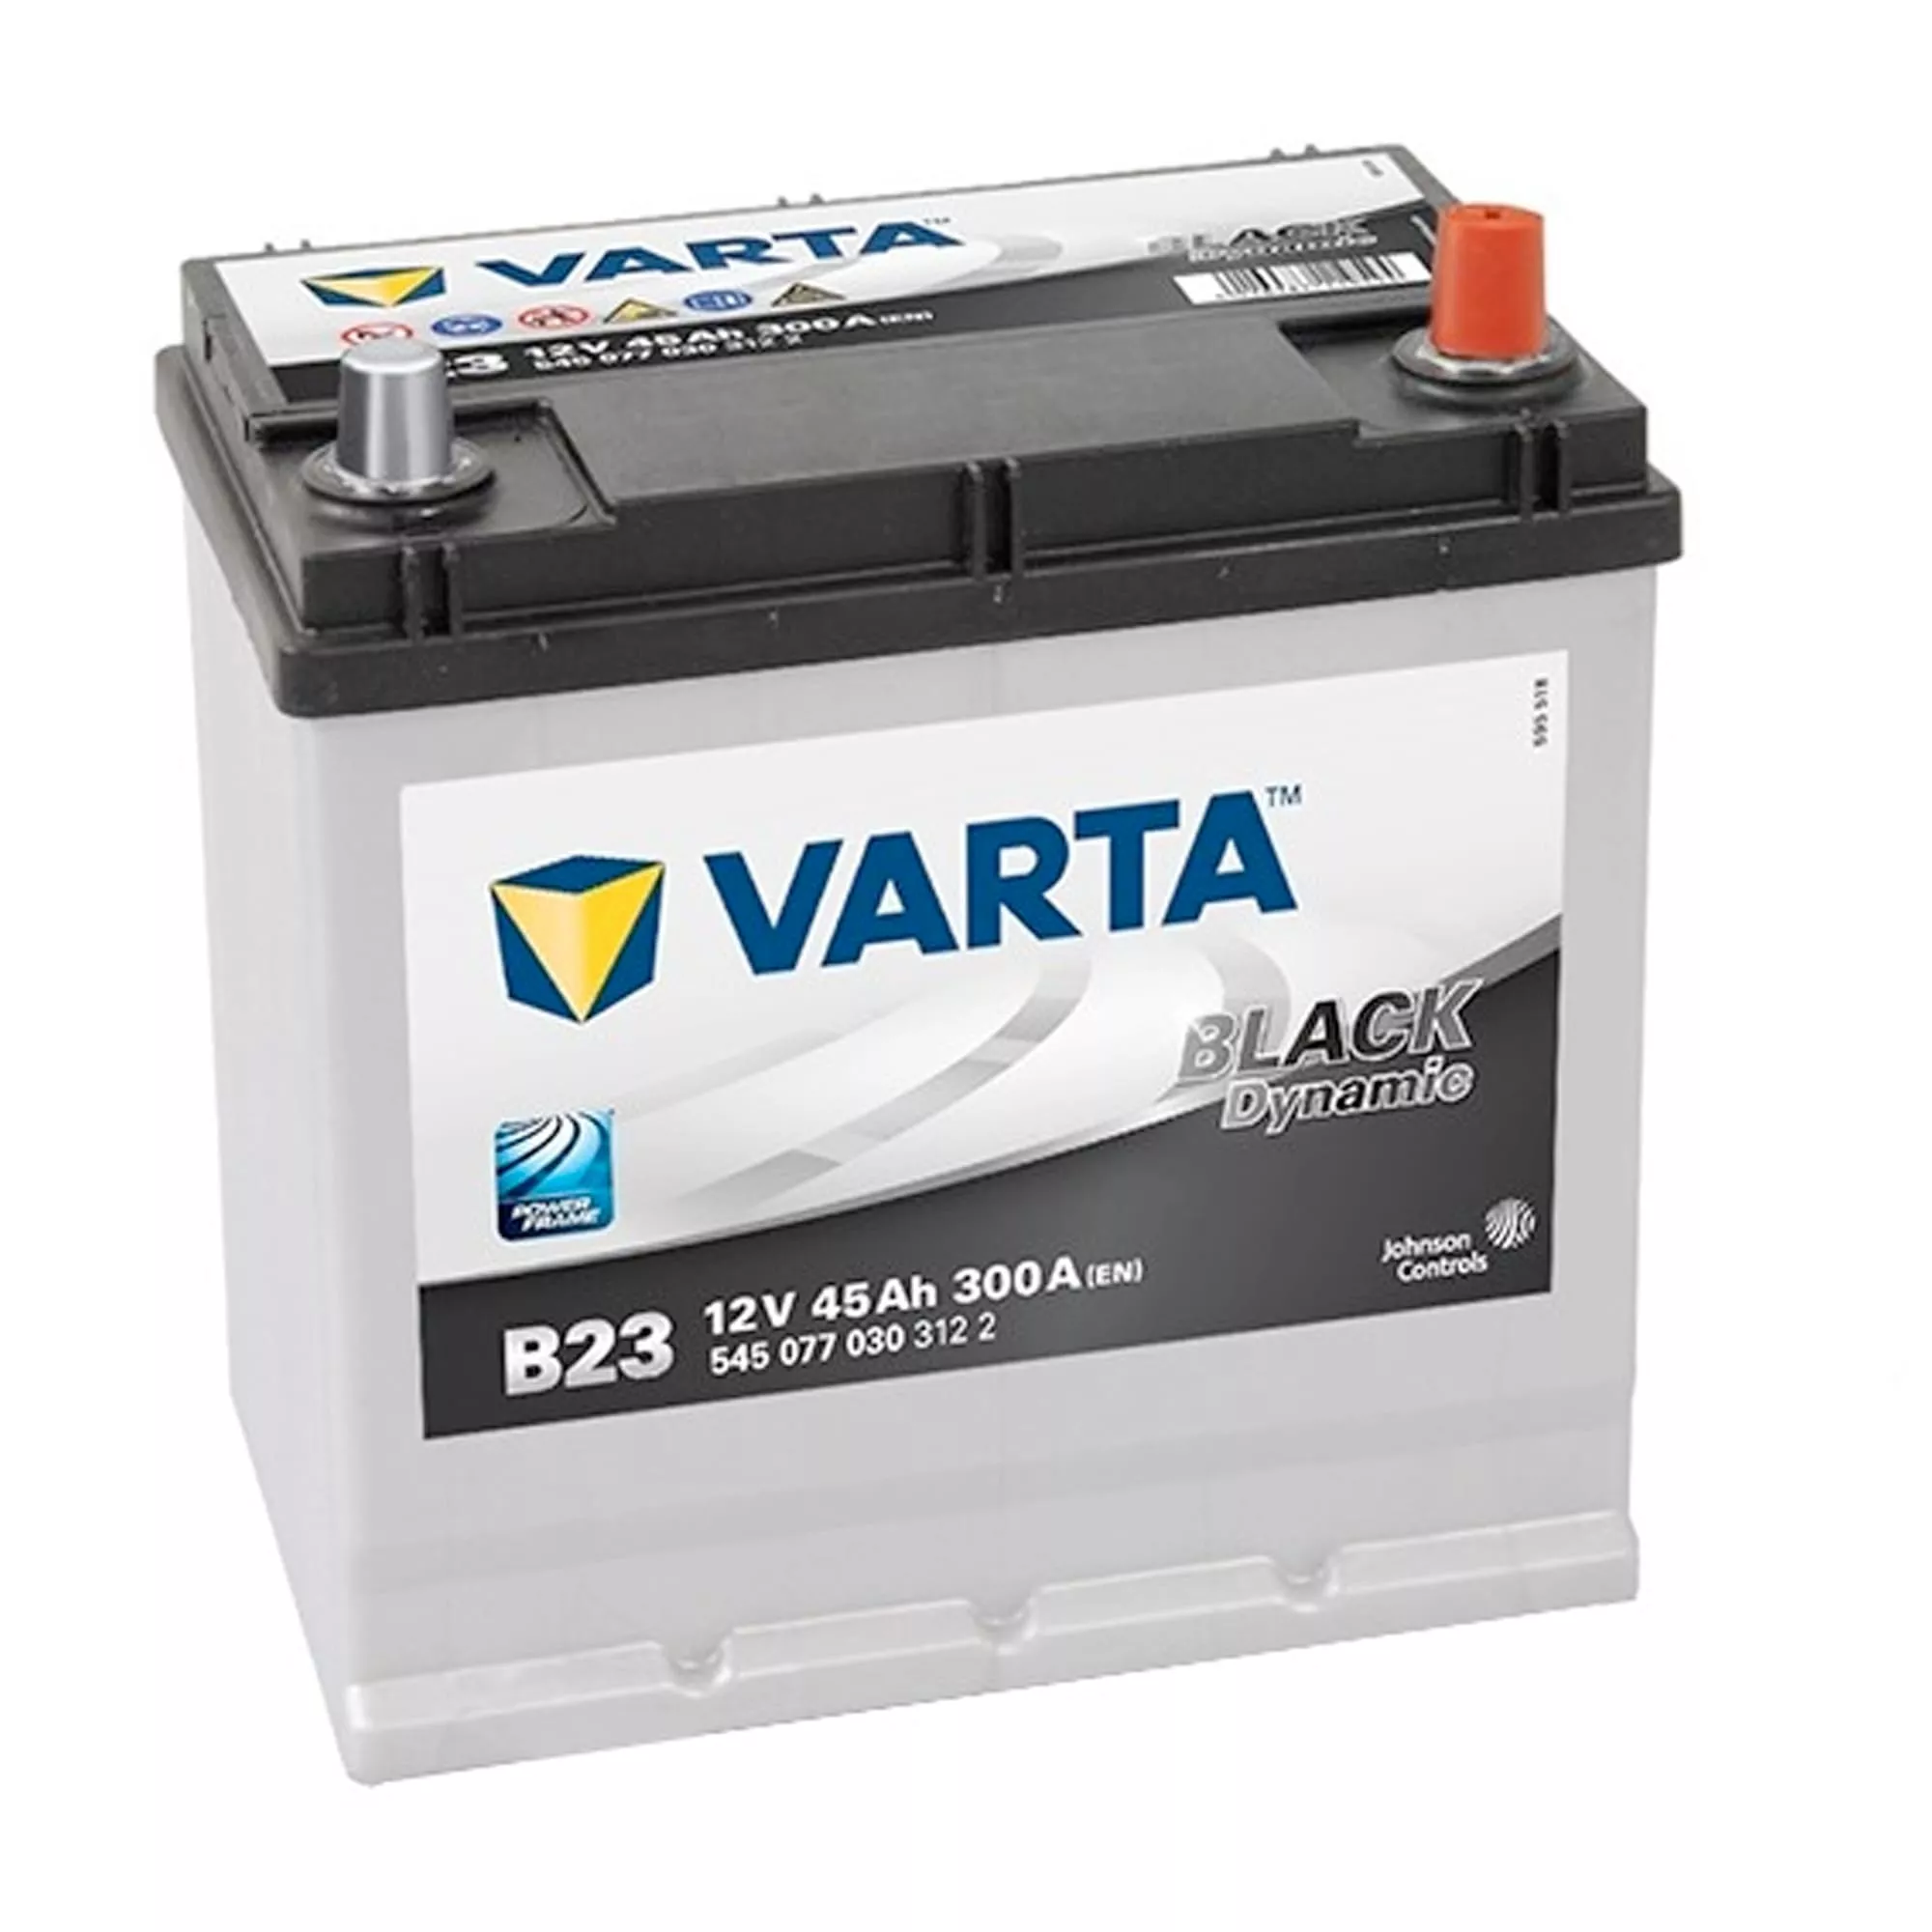 Автомобильный аккумулятор Varta Black Dynamic B23 6СТ-45Ah 300А АзЕ (545077030)